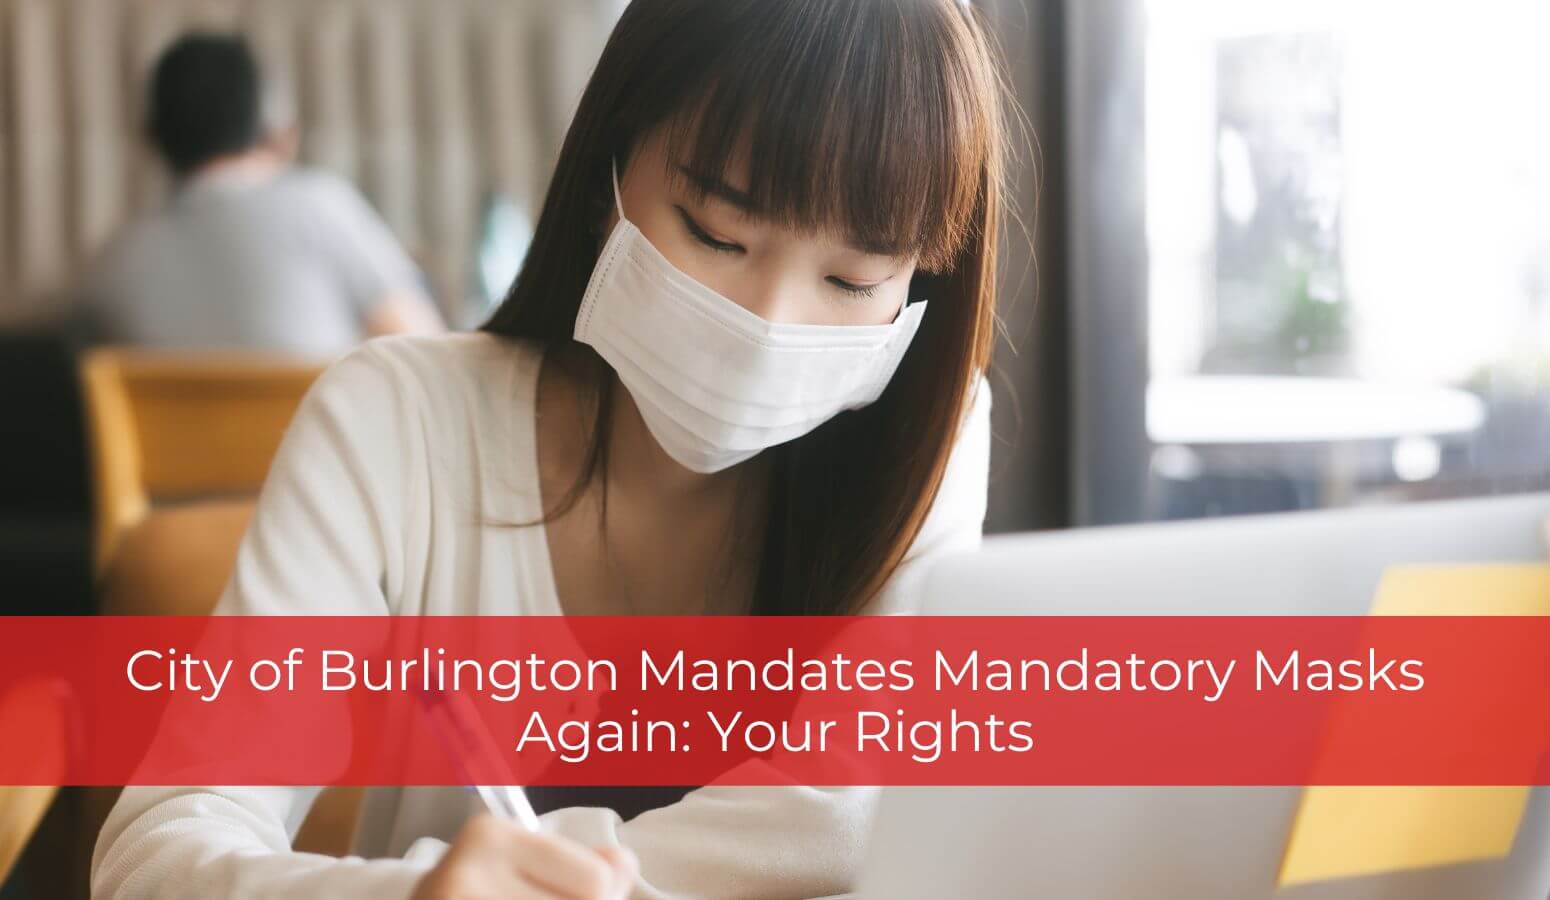 Featured image for “City of Burlington Mandates Mandatory Masks Again: Your Rights”